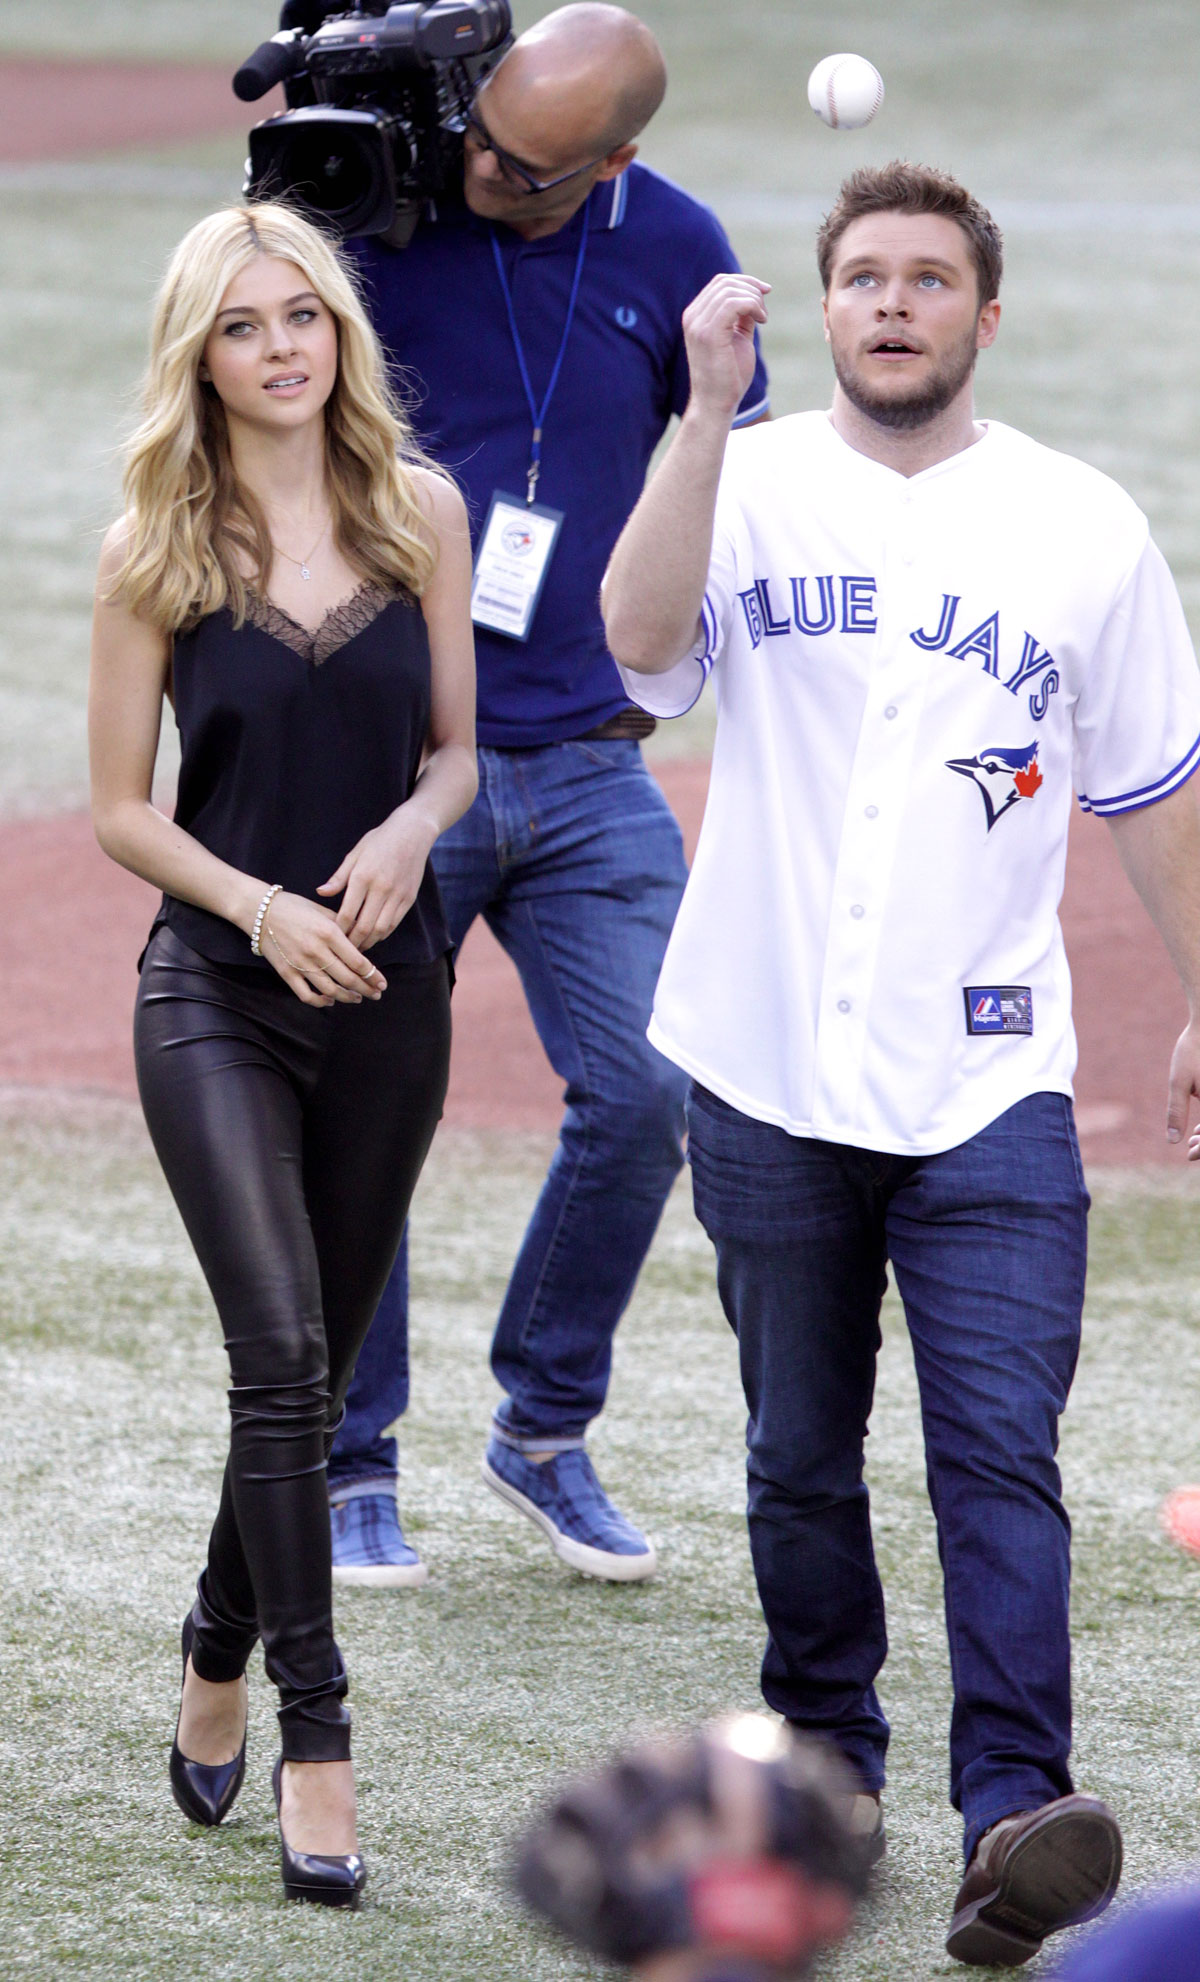 Nicola Peltz attends Blue Jays baseball game